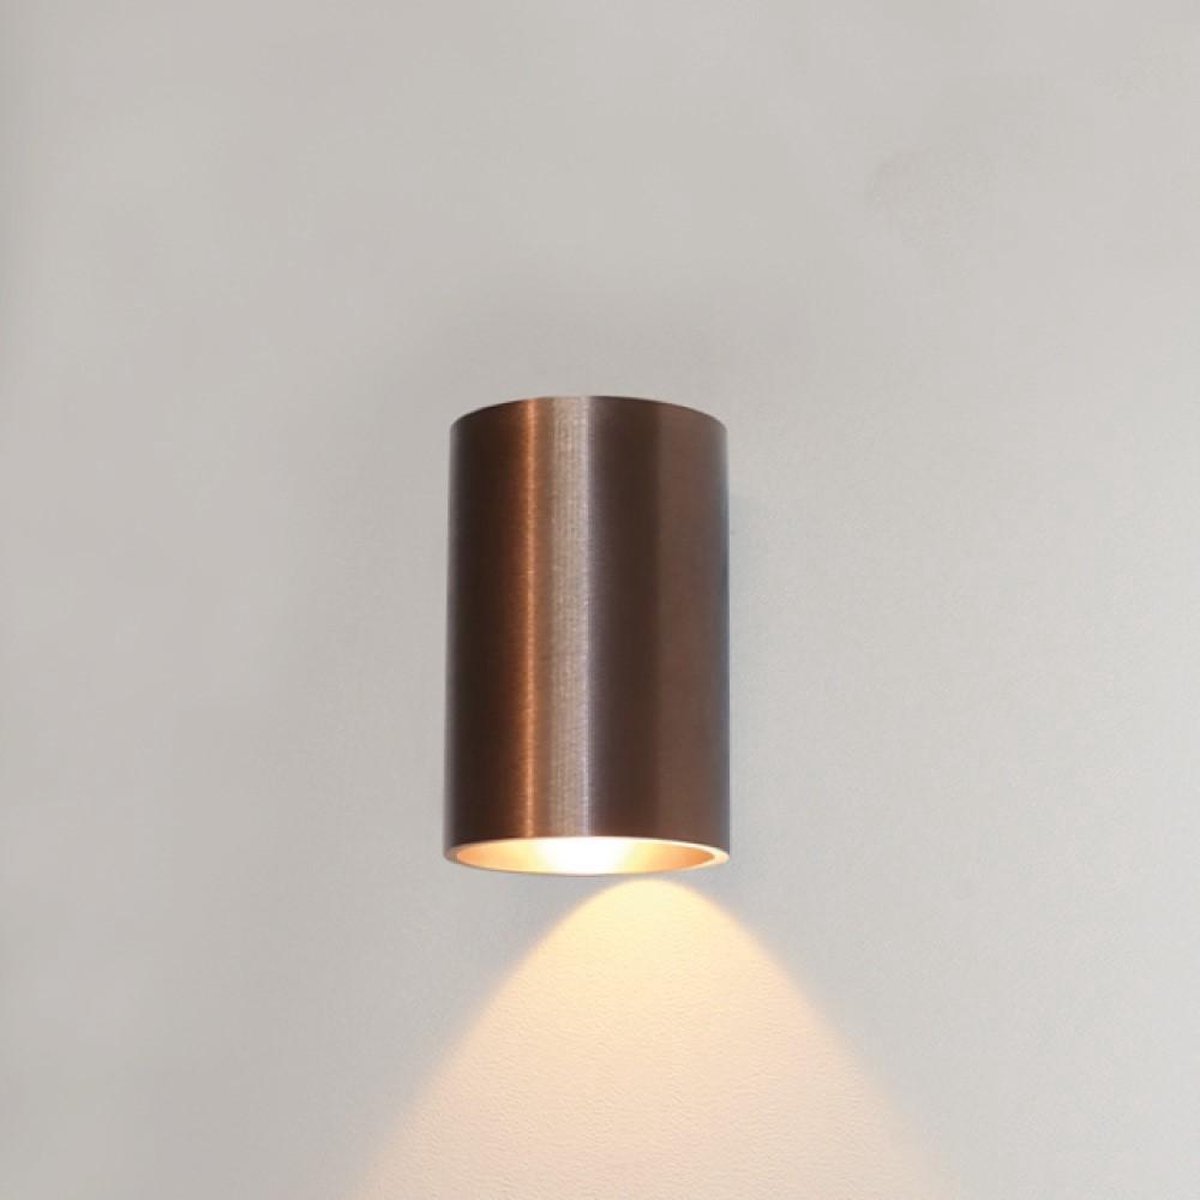 Wandlamp Brody 1 Brons - Ø7,2cm - LED 4W 2700K 360lm - IP54 - Dimbaar > wandlamp binnen brons | wandlamp brons | muurlamp brons | led lamp brons | sfeer lamp brons | design lamp brons